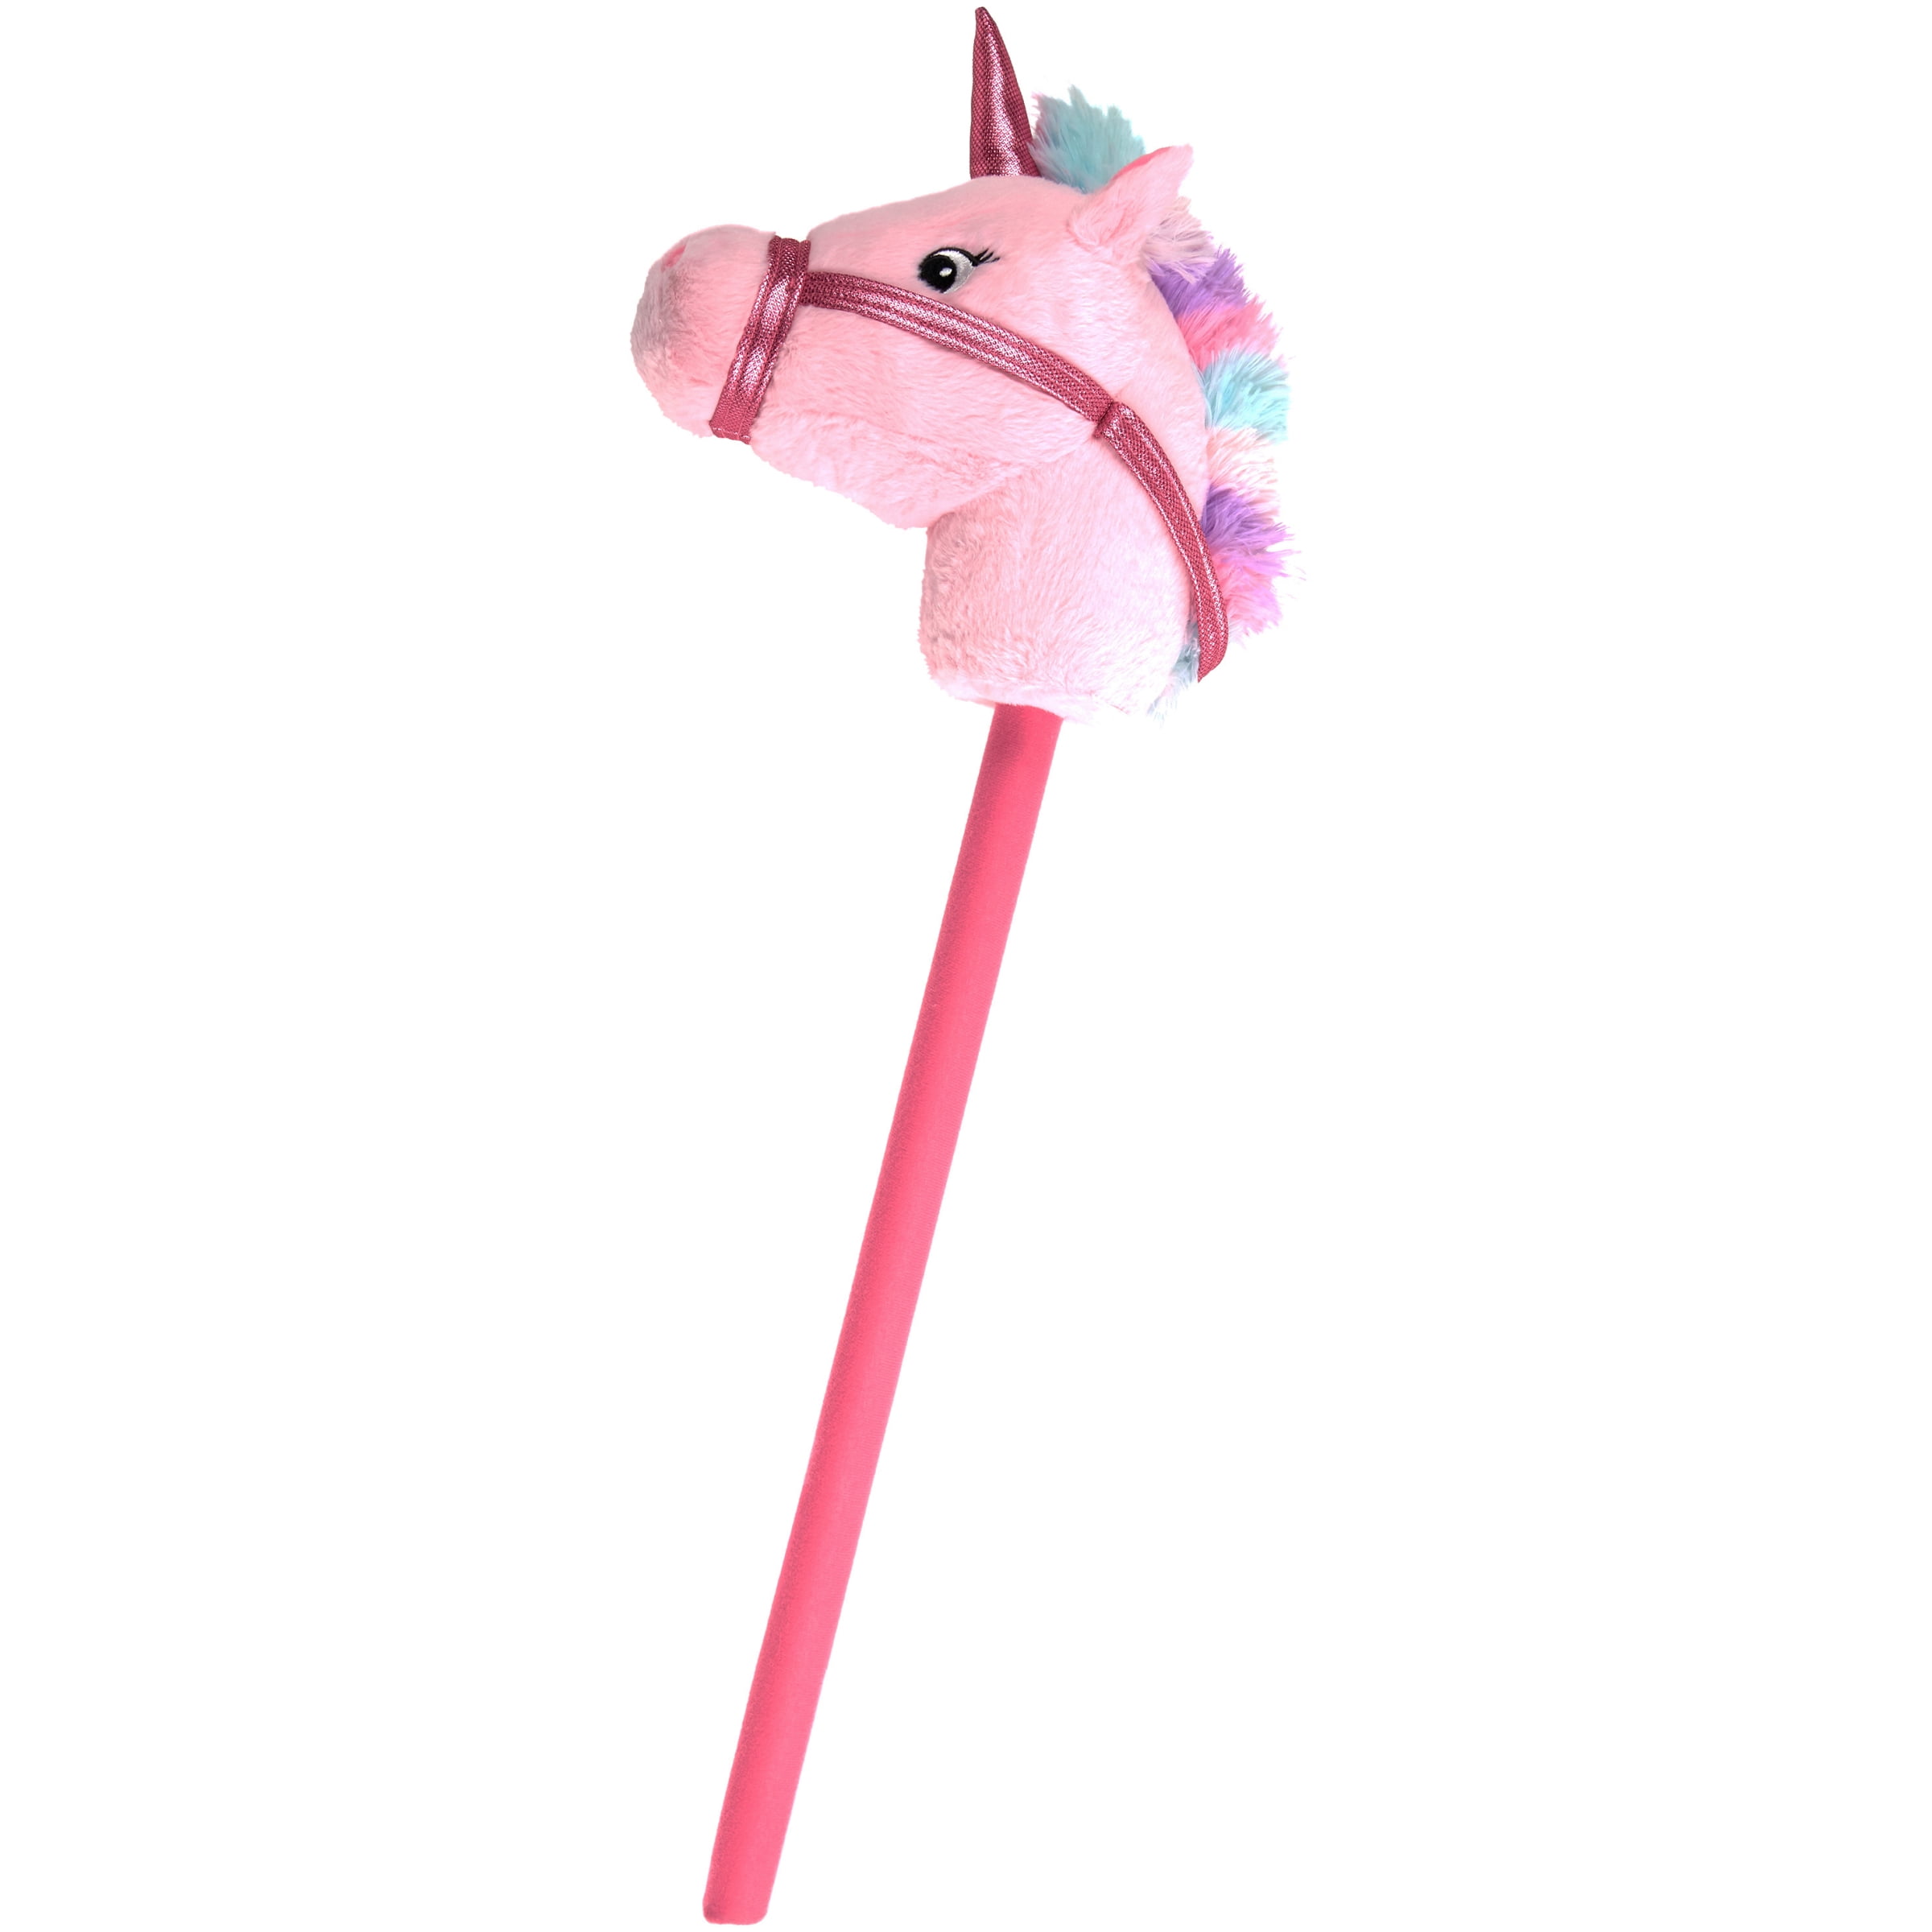 unicorn horse toy walmart